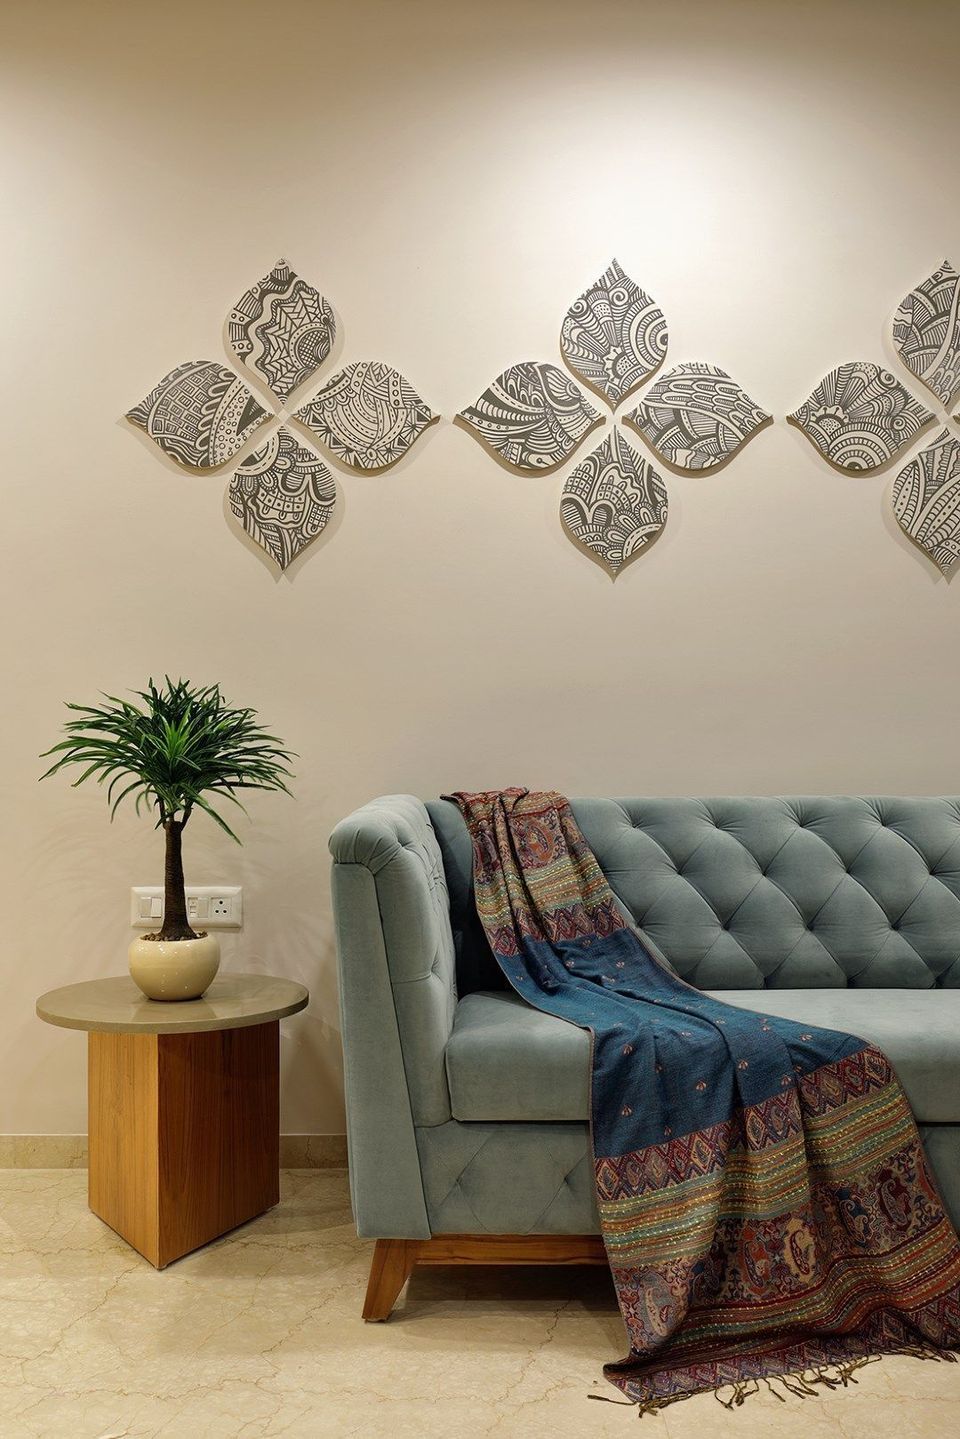 Gwalior Interior & Furniture Palace - Indore